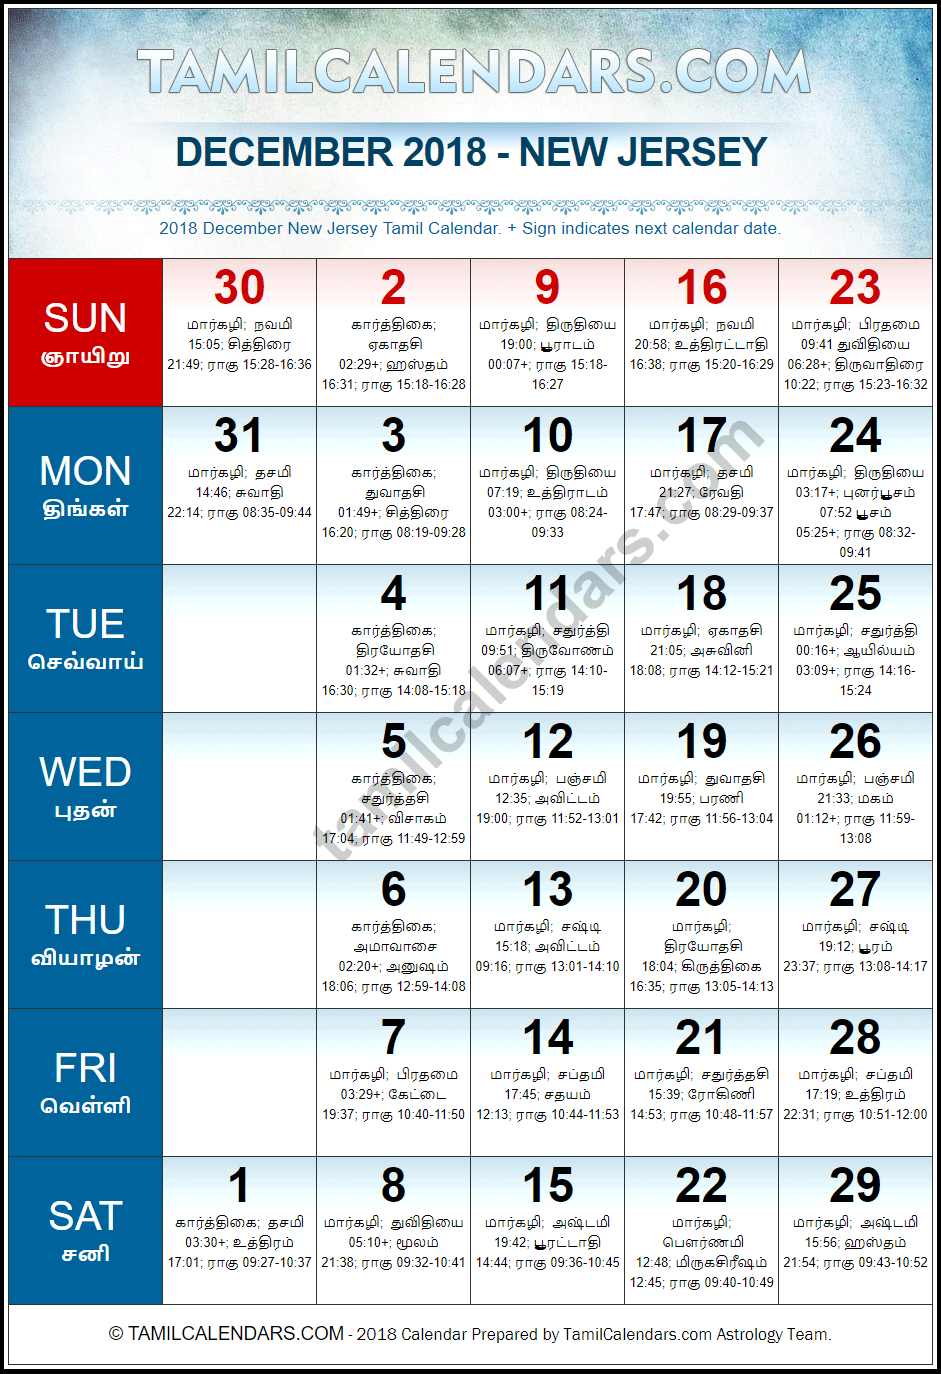 December 2018 Tamil Calendar for New Jersey, USA